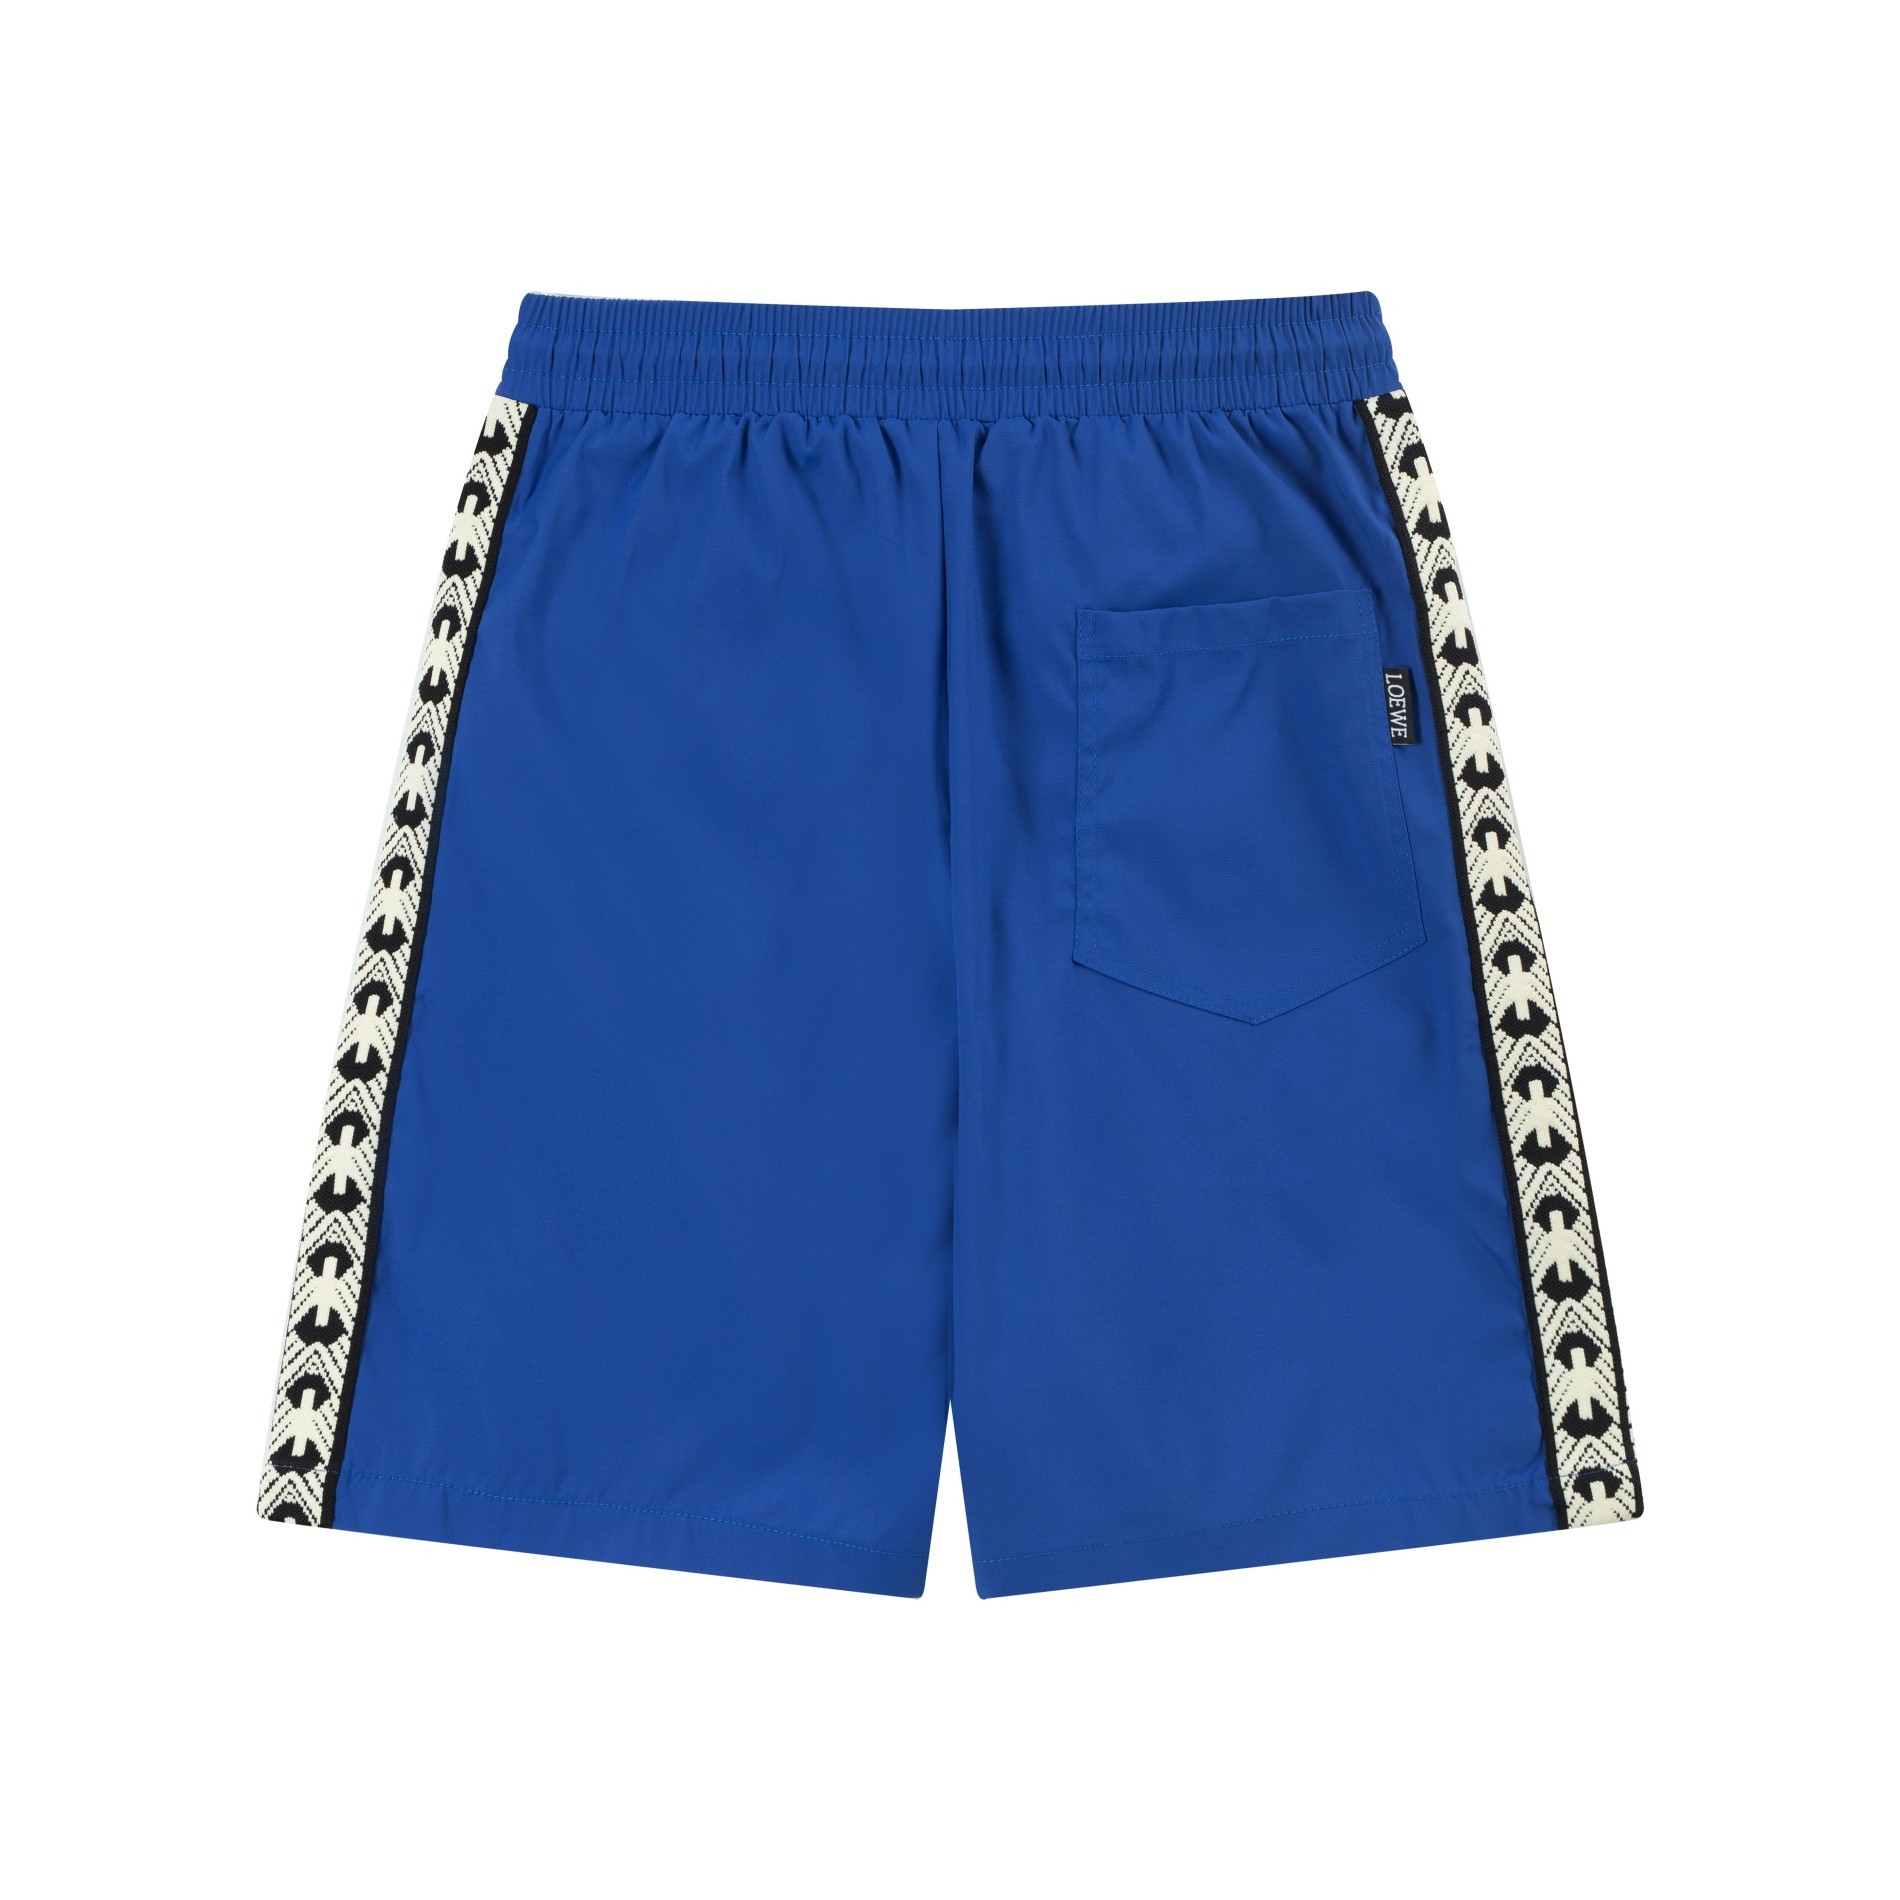 SS罗意威LOEWE新款沙滩短裤颜色黑色-白色-绿色-蓝色尺寸M-4XL